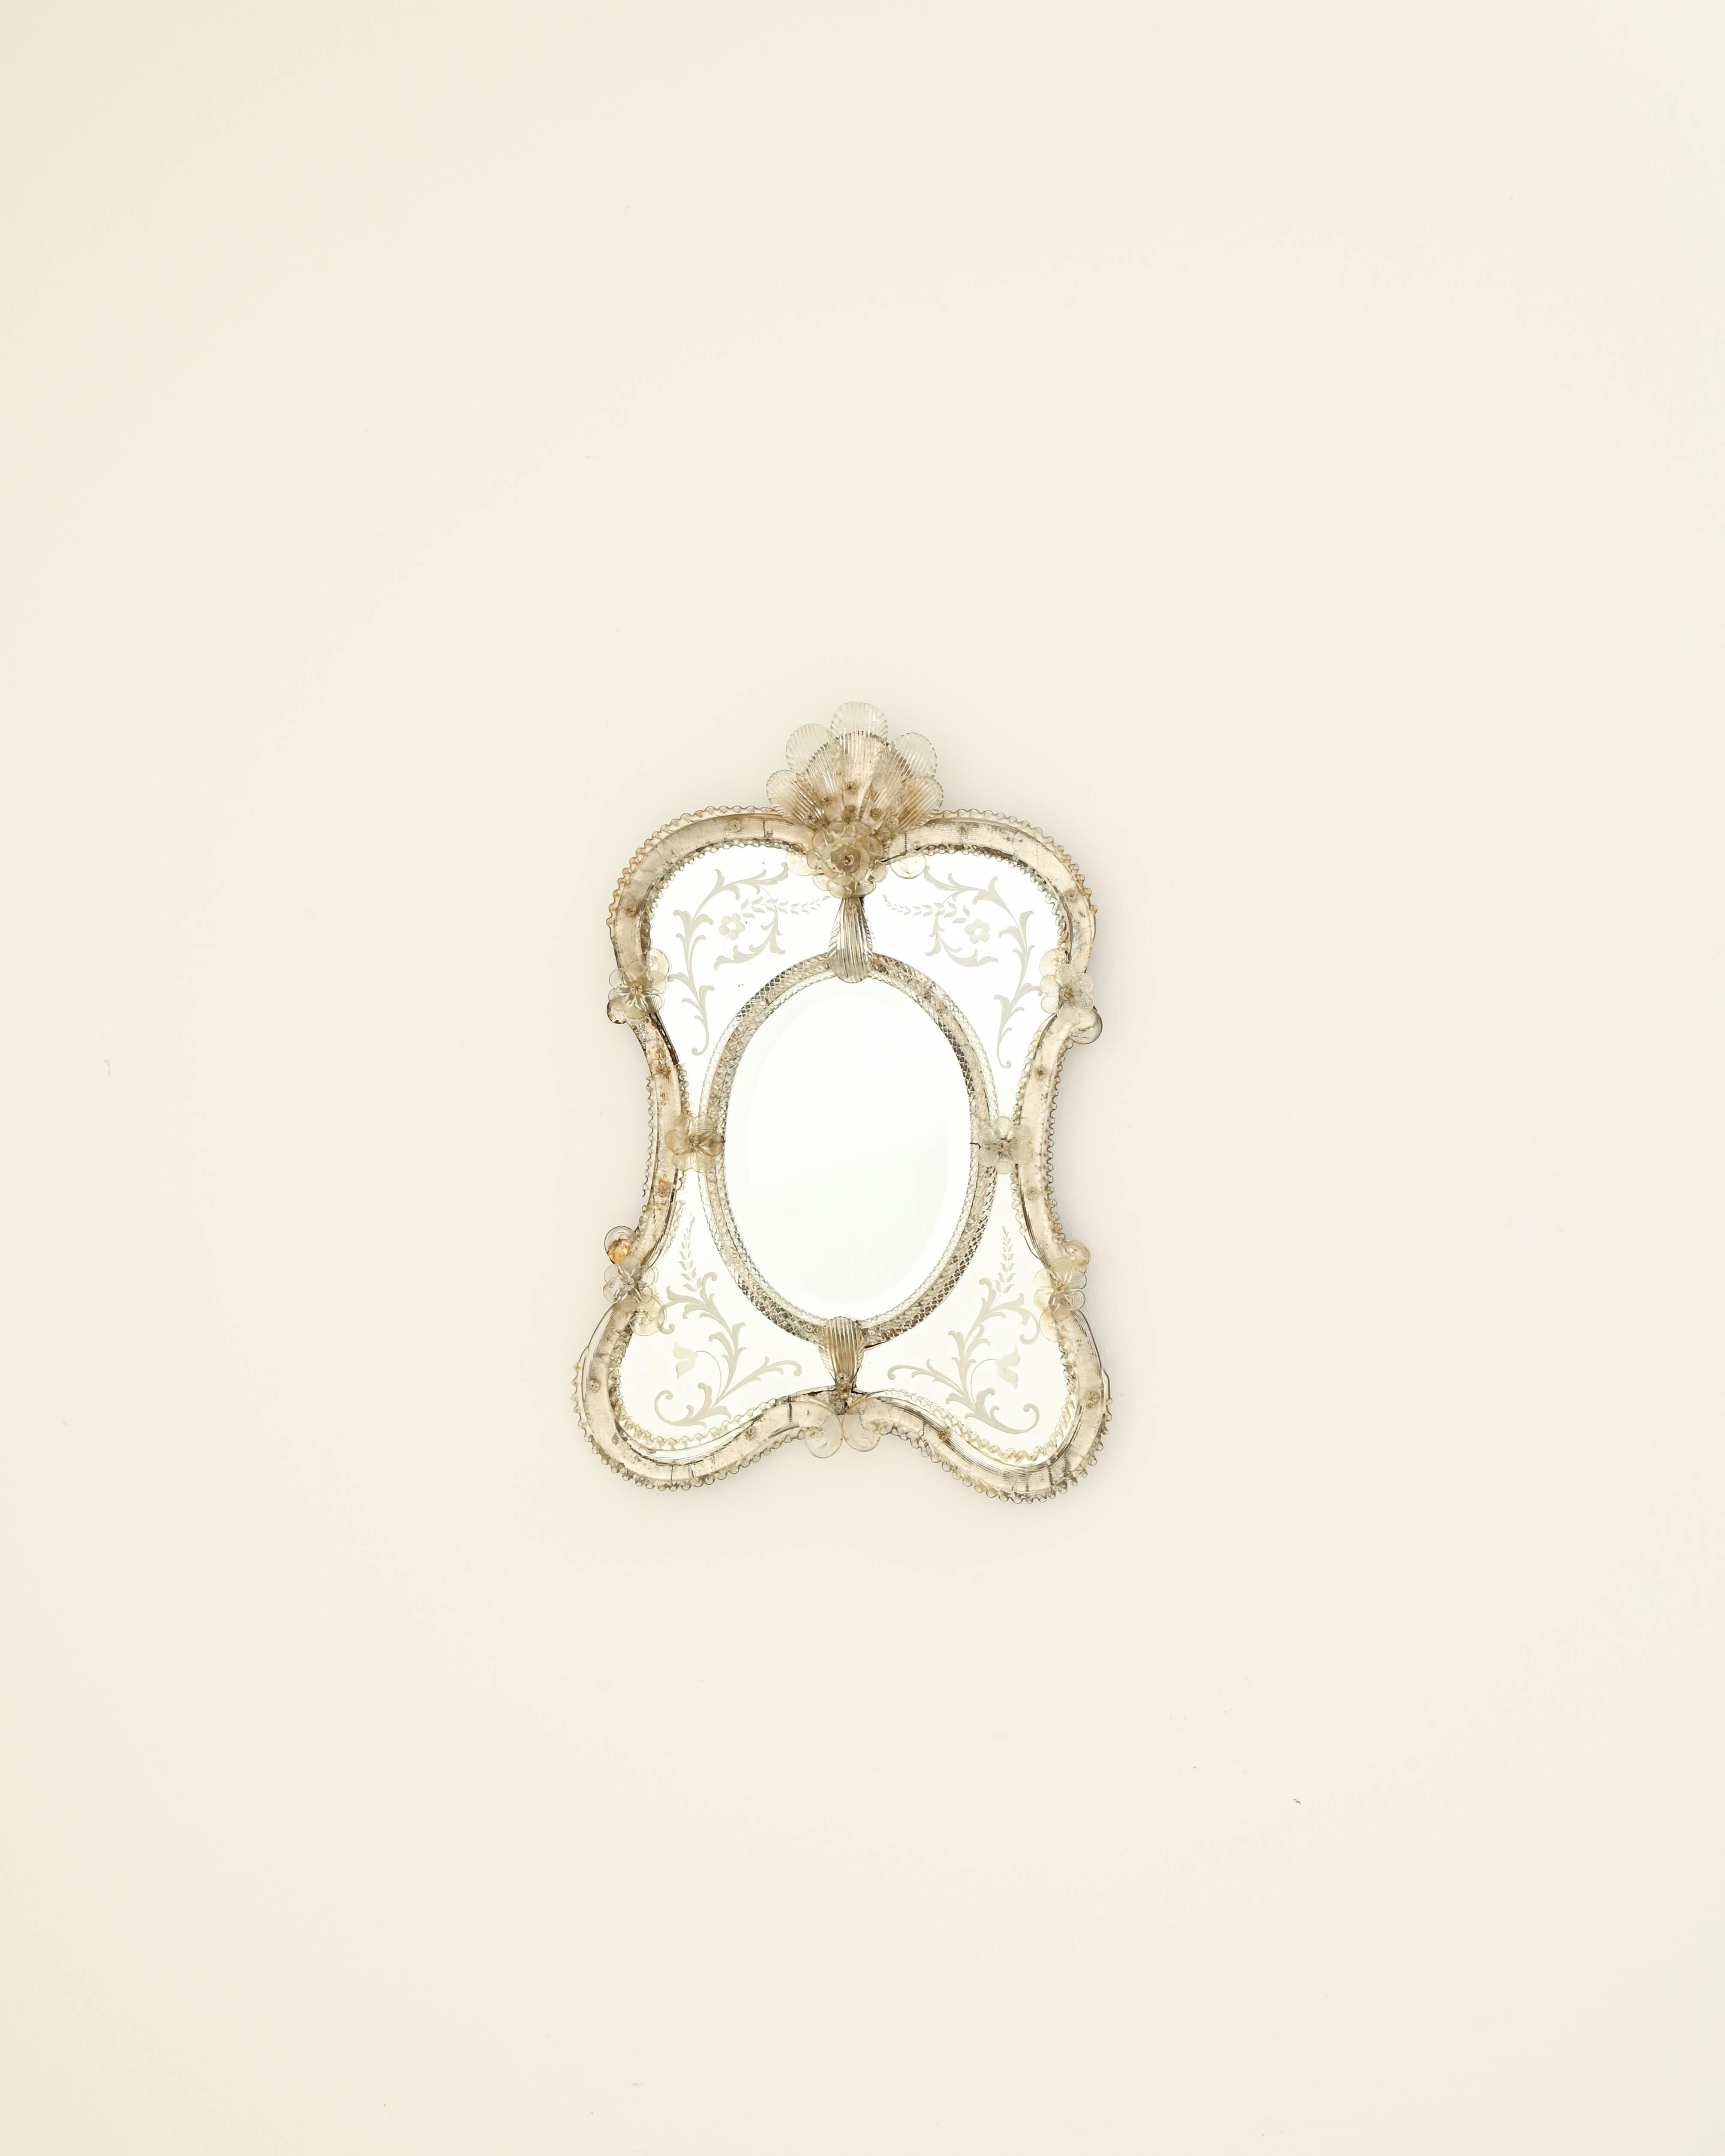 Rococo Revival 20th Century Italian Venetian Mirror